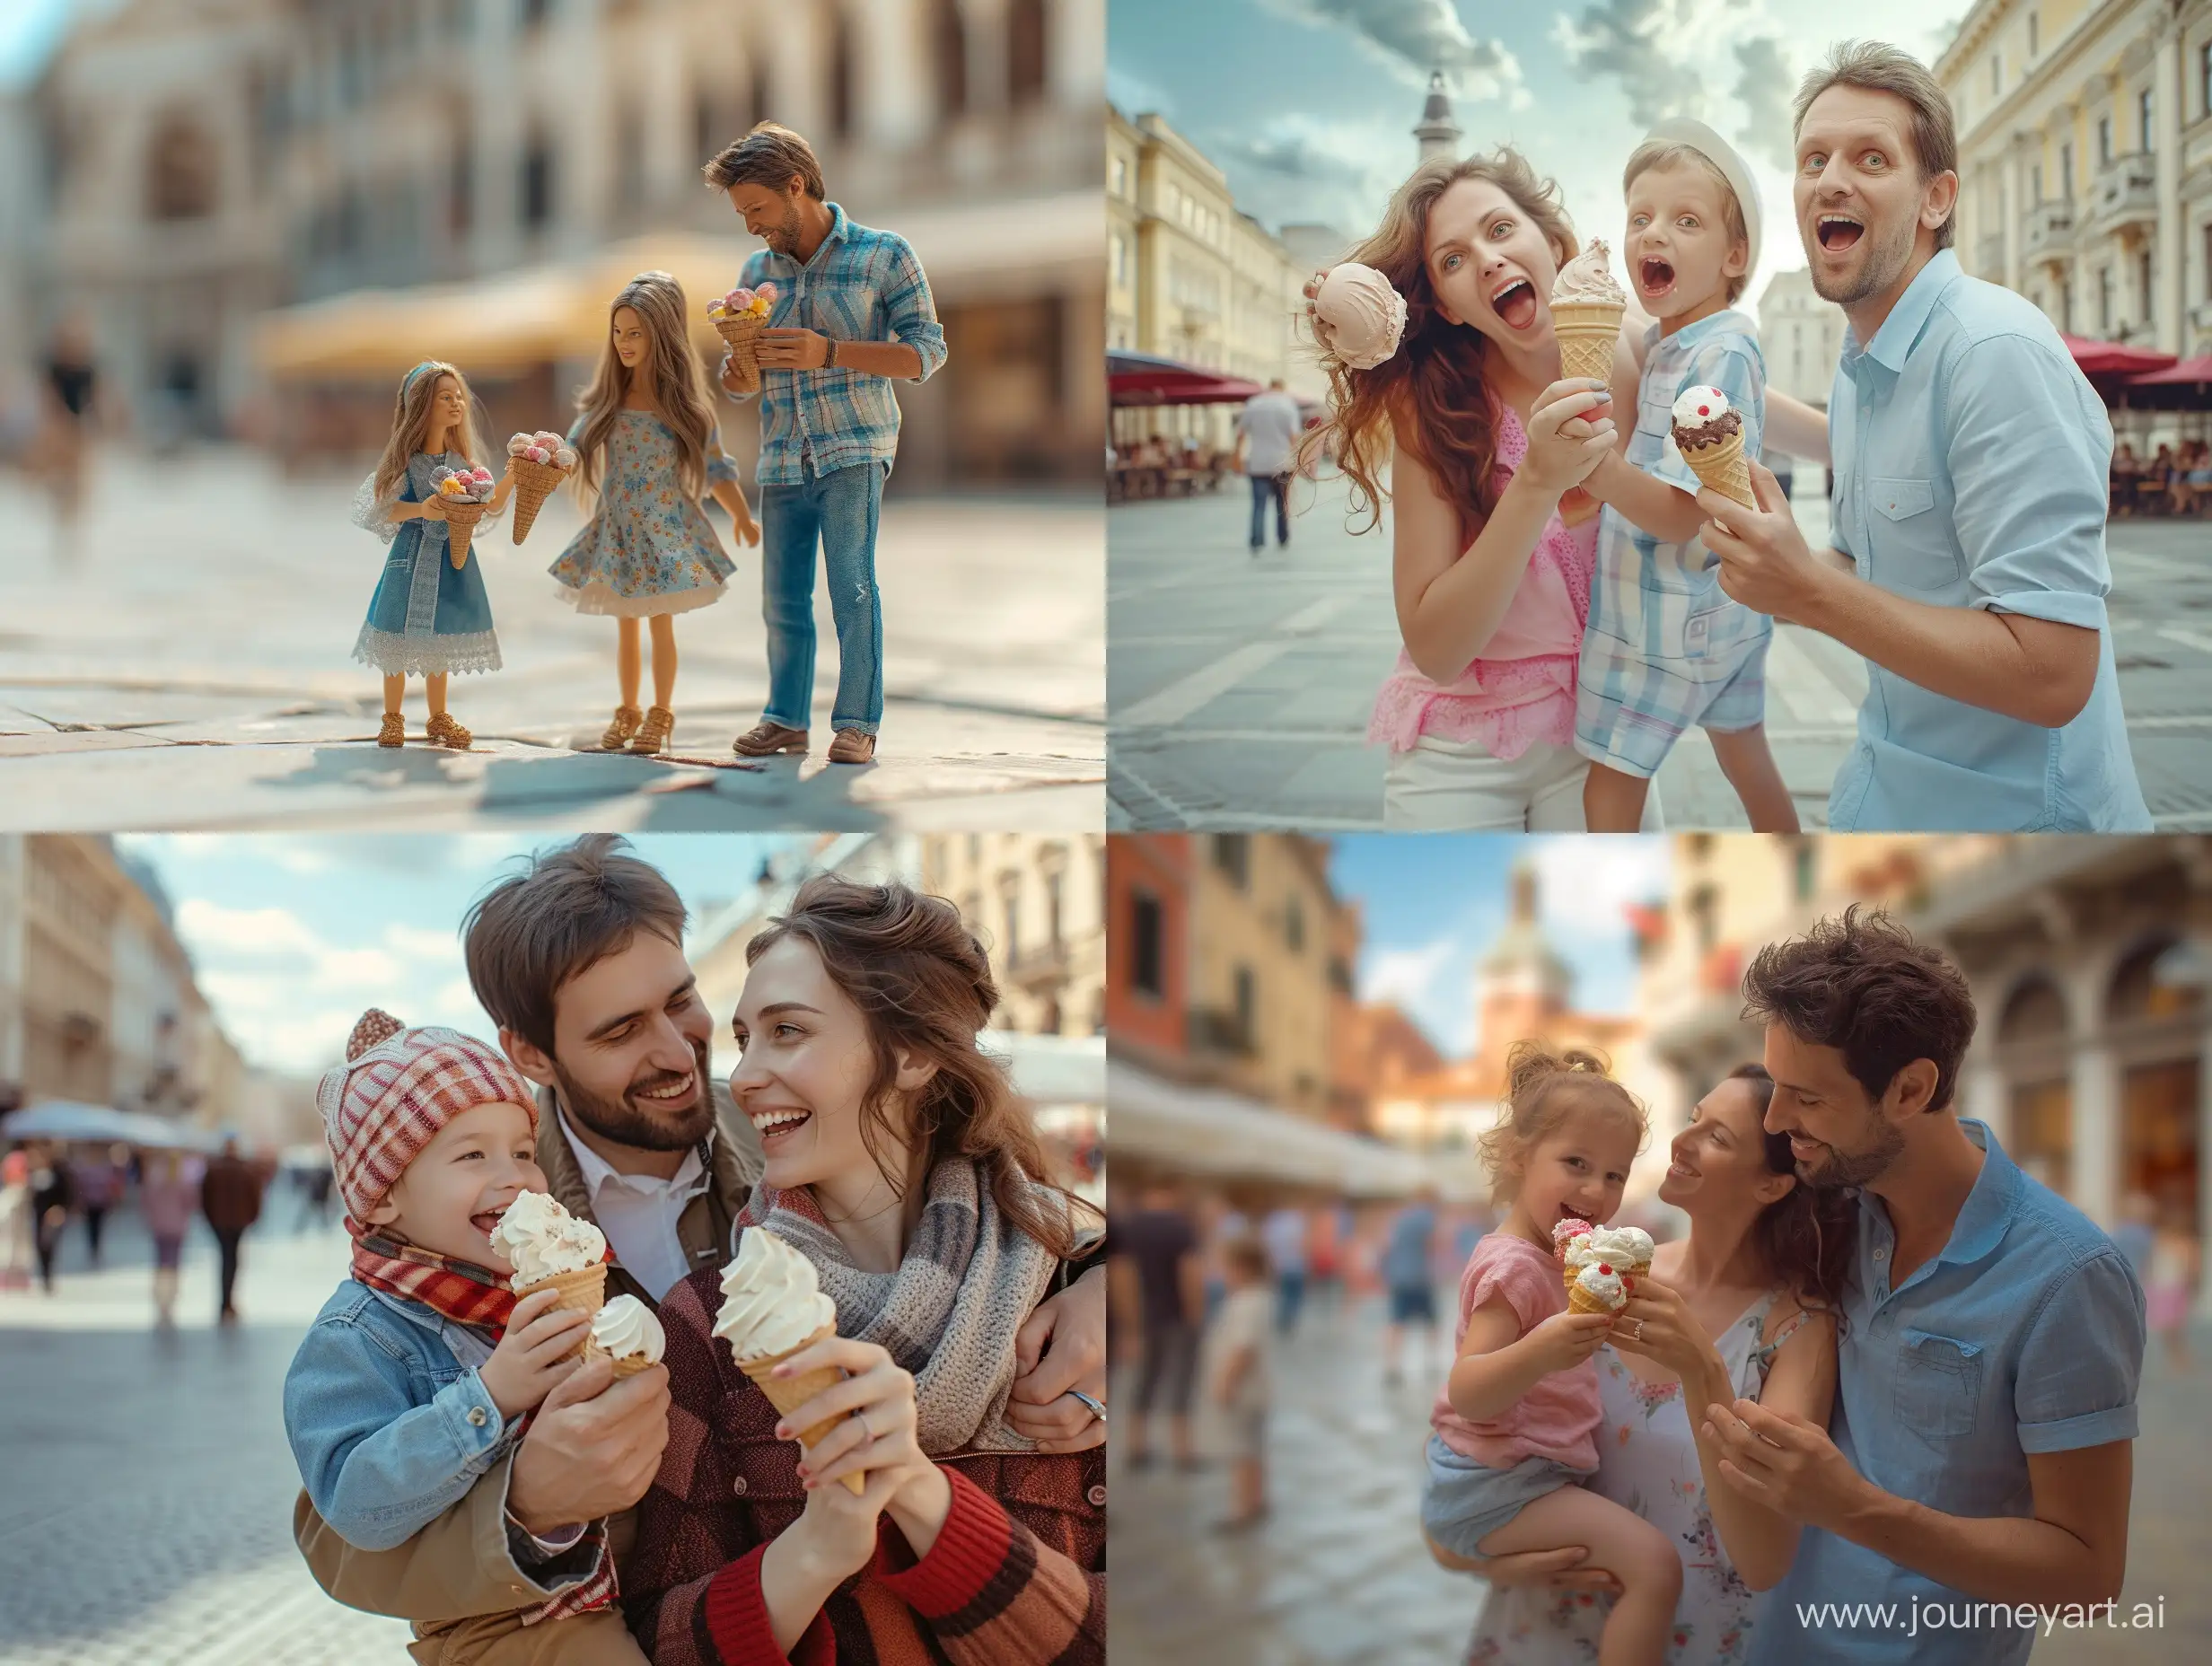 Joyful-Family-Enjoying-Ice-Cream-Delights-in-the-Vibrant-Square